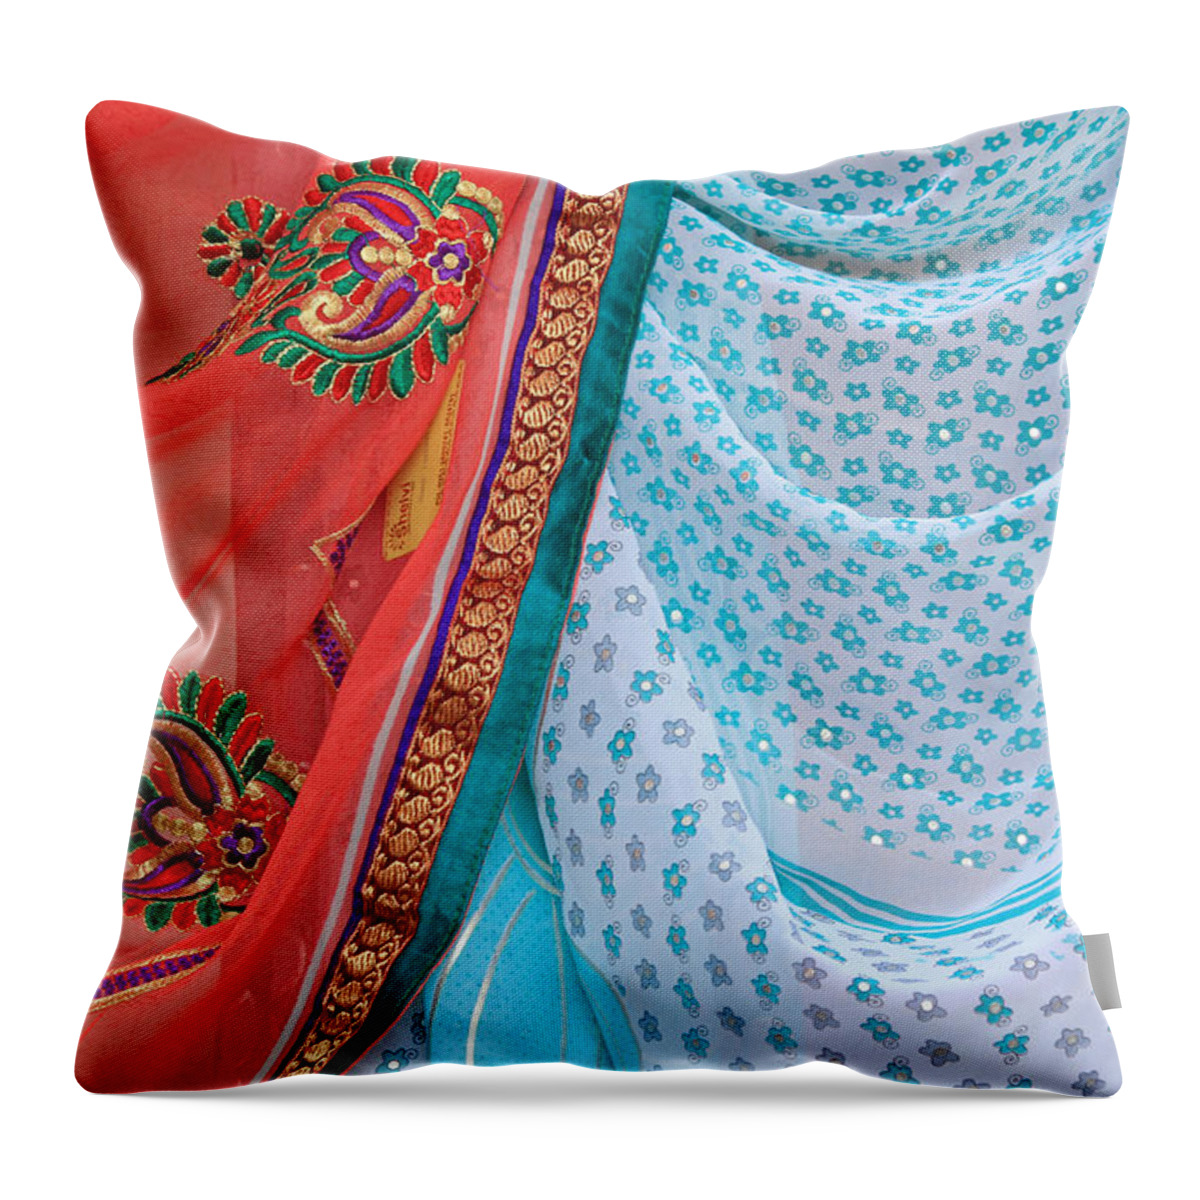 Mumbai Throw Pillow featuring the photograph Saree In the Market by E Faithe Lester